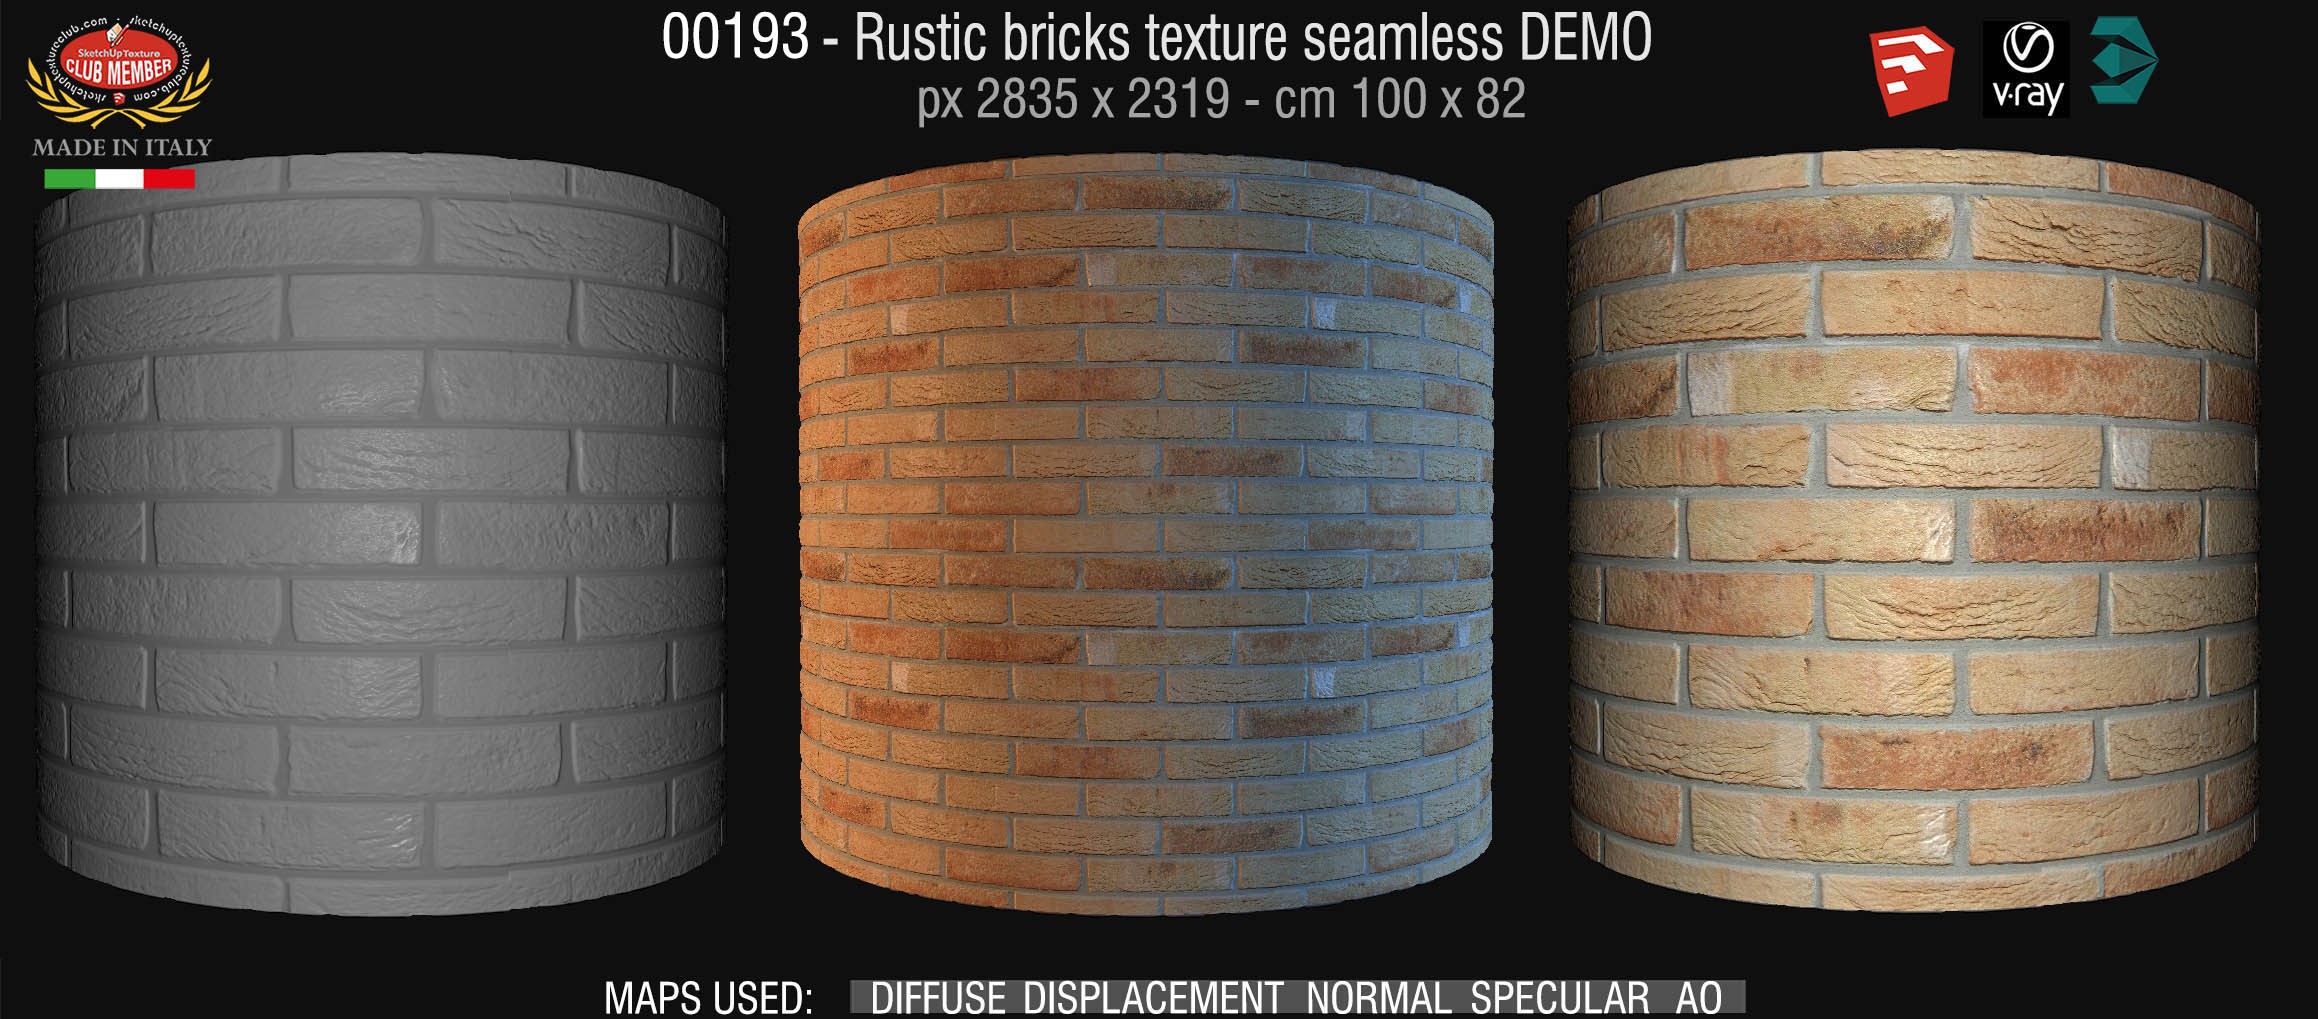 00193 Rustic bricks texture seamless + maps DEMO